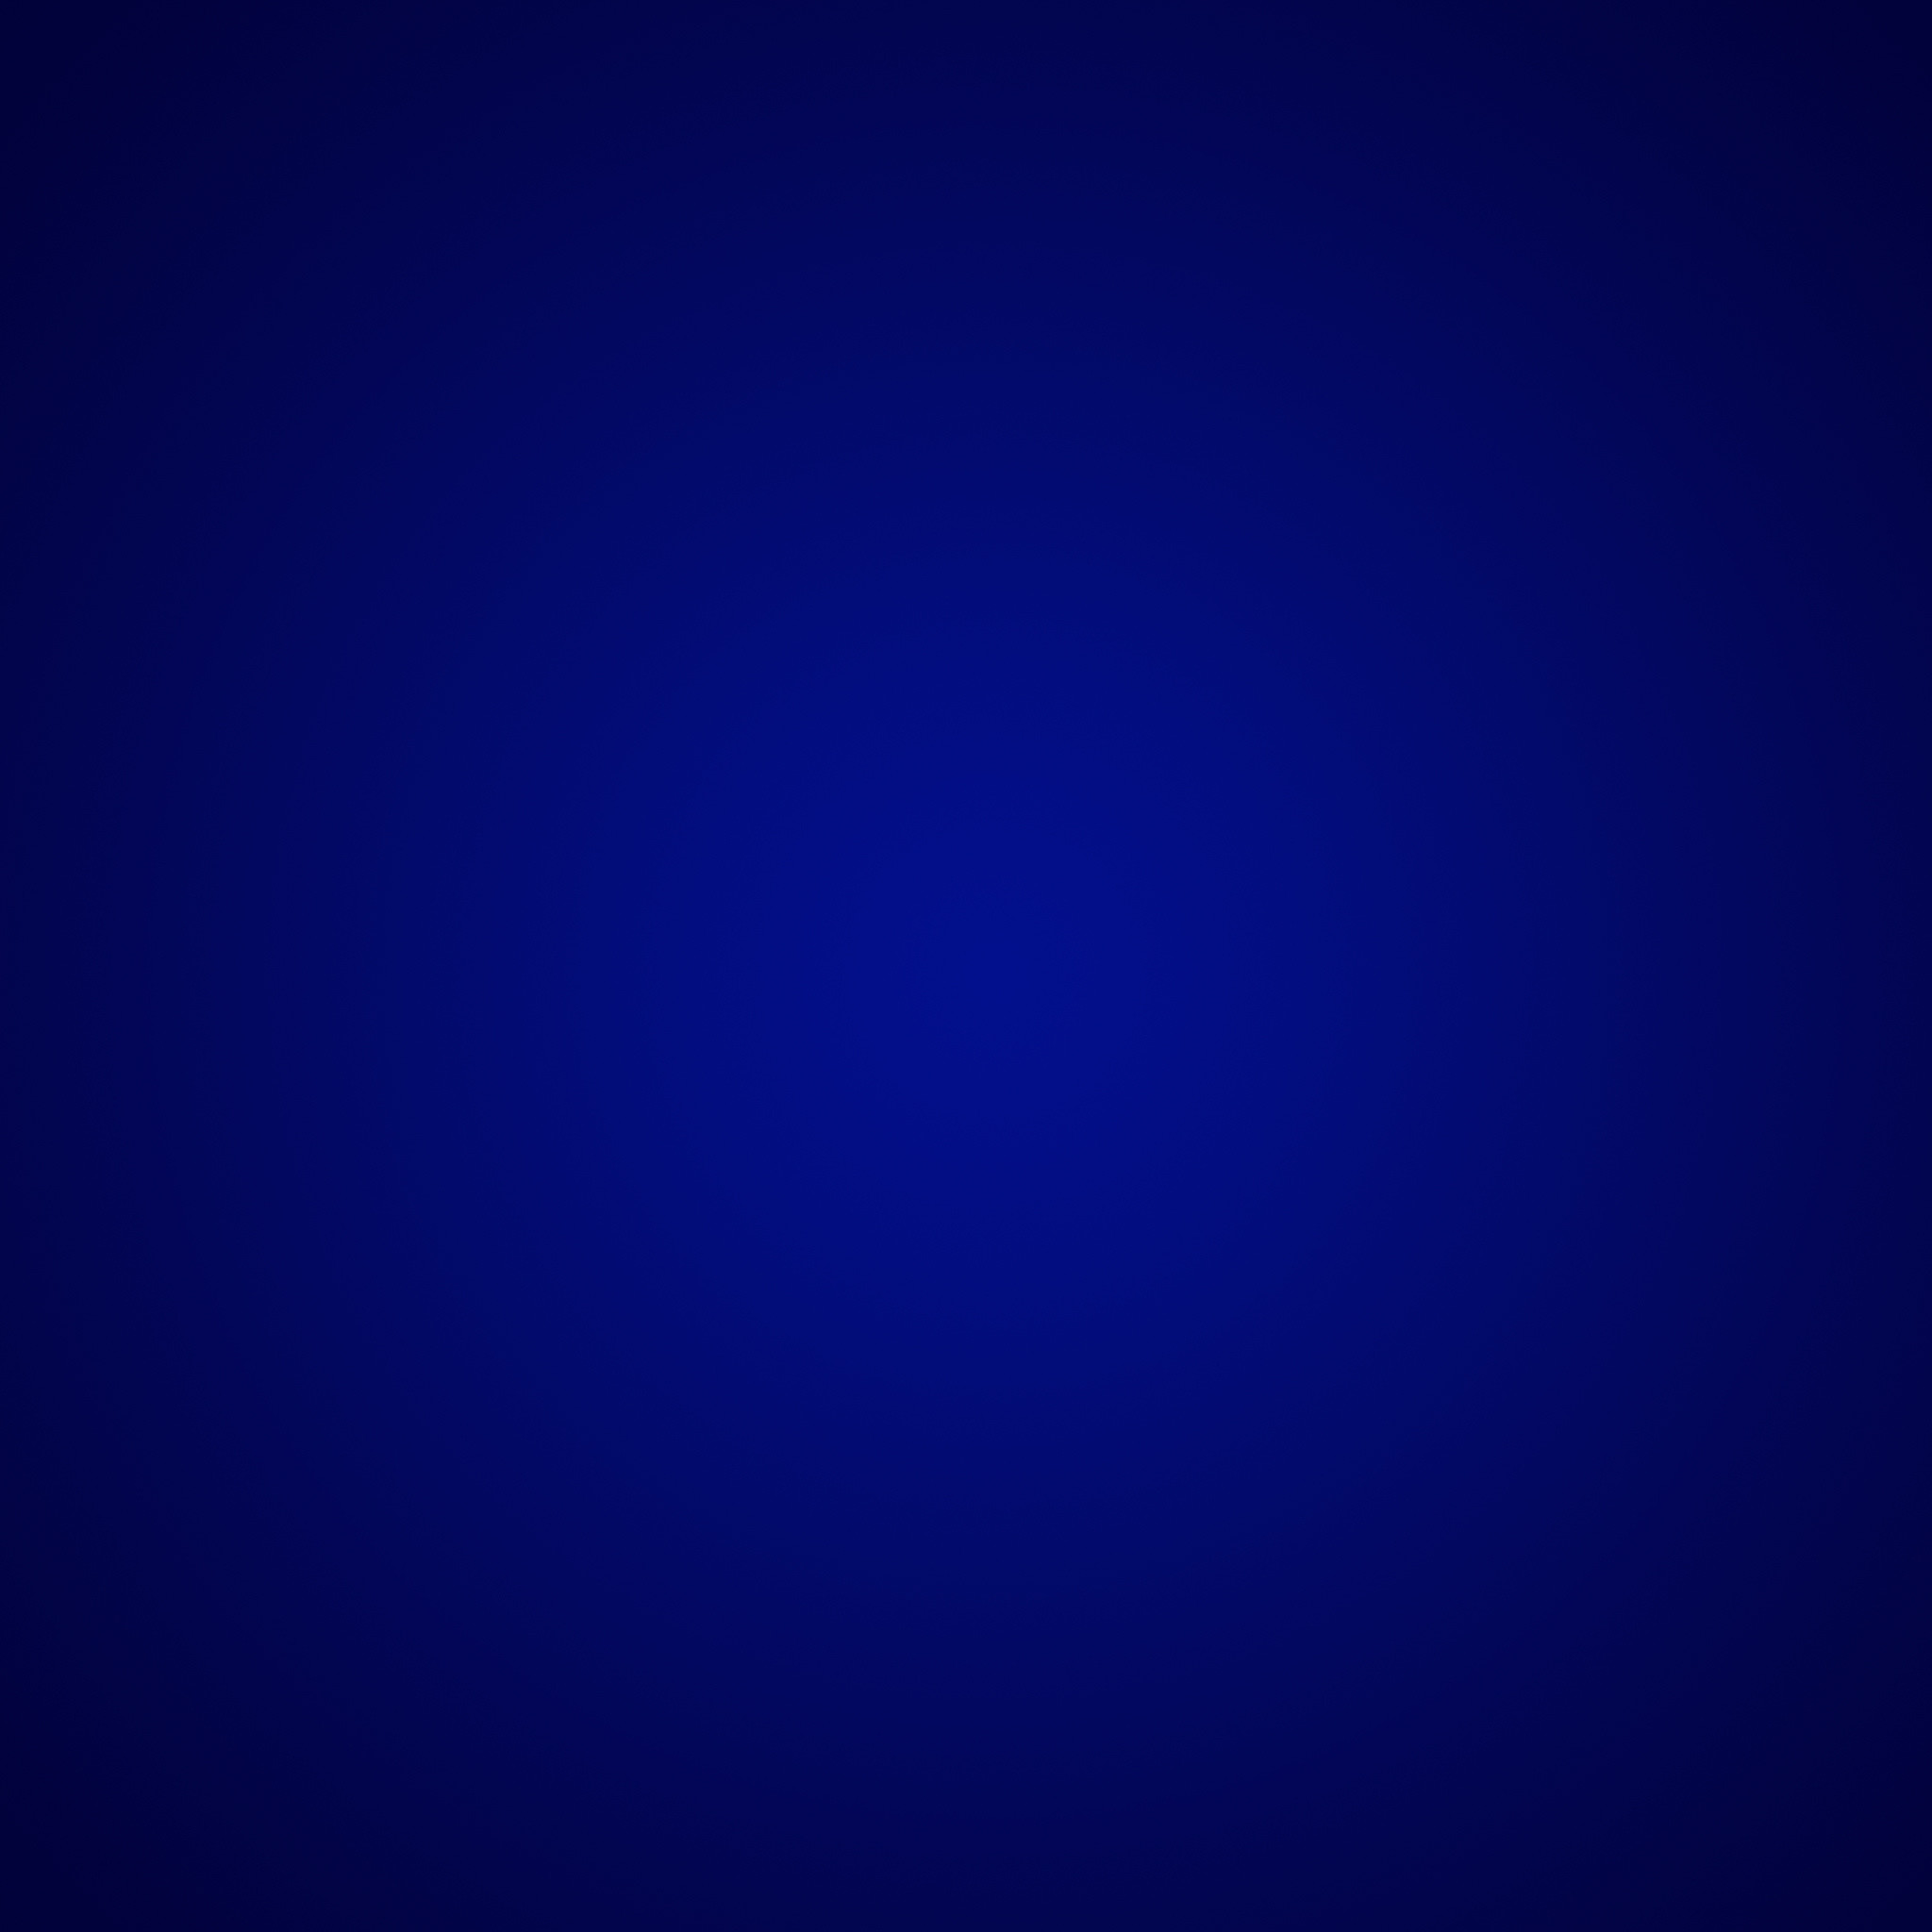 2048x2048 Dark blue gradient iPad Air Wallpapers HD iPad Air Retina Wallpapers  